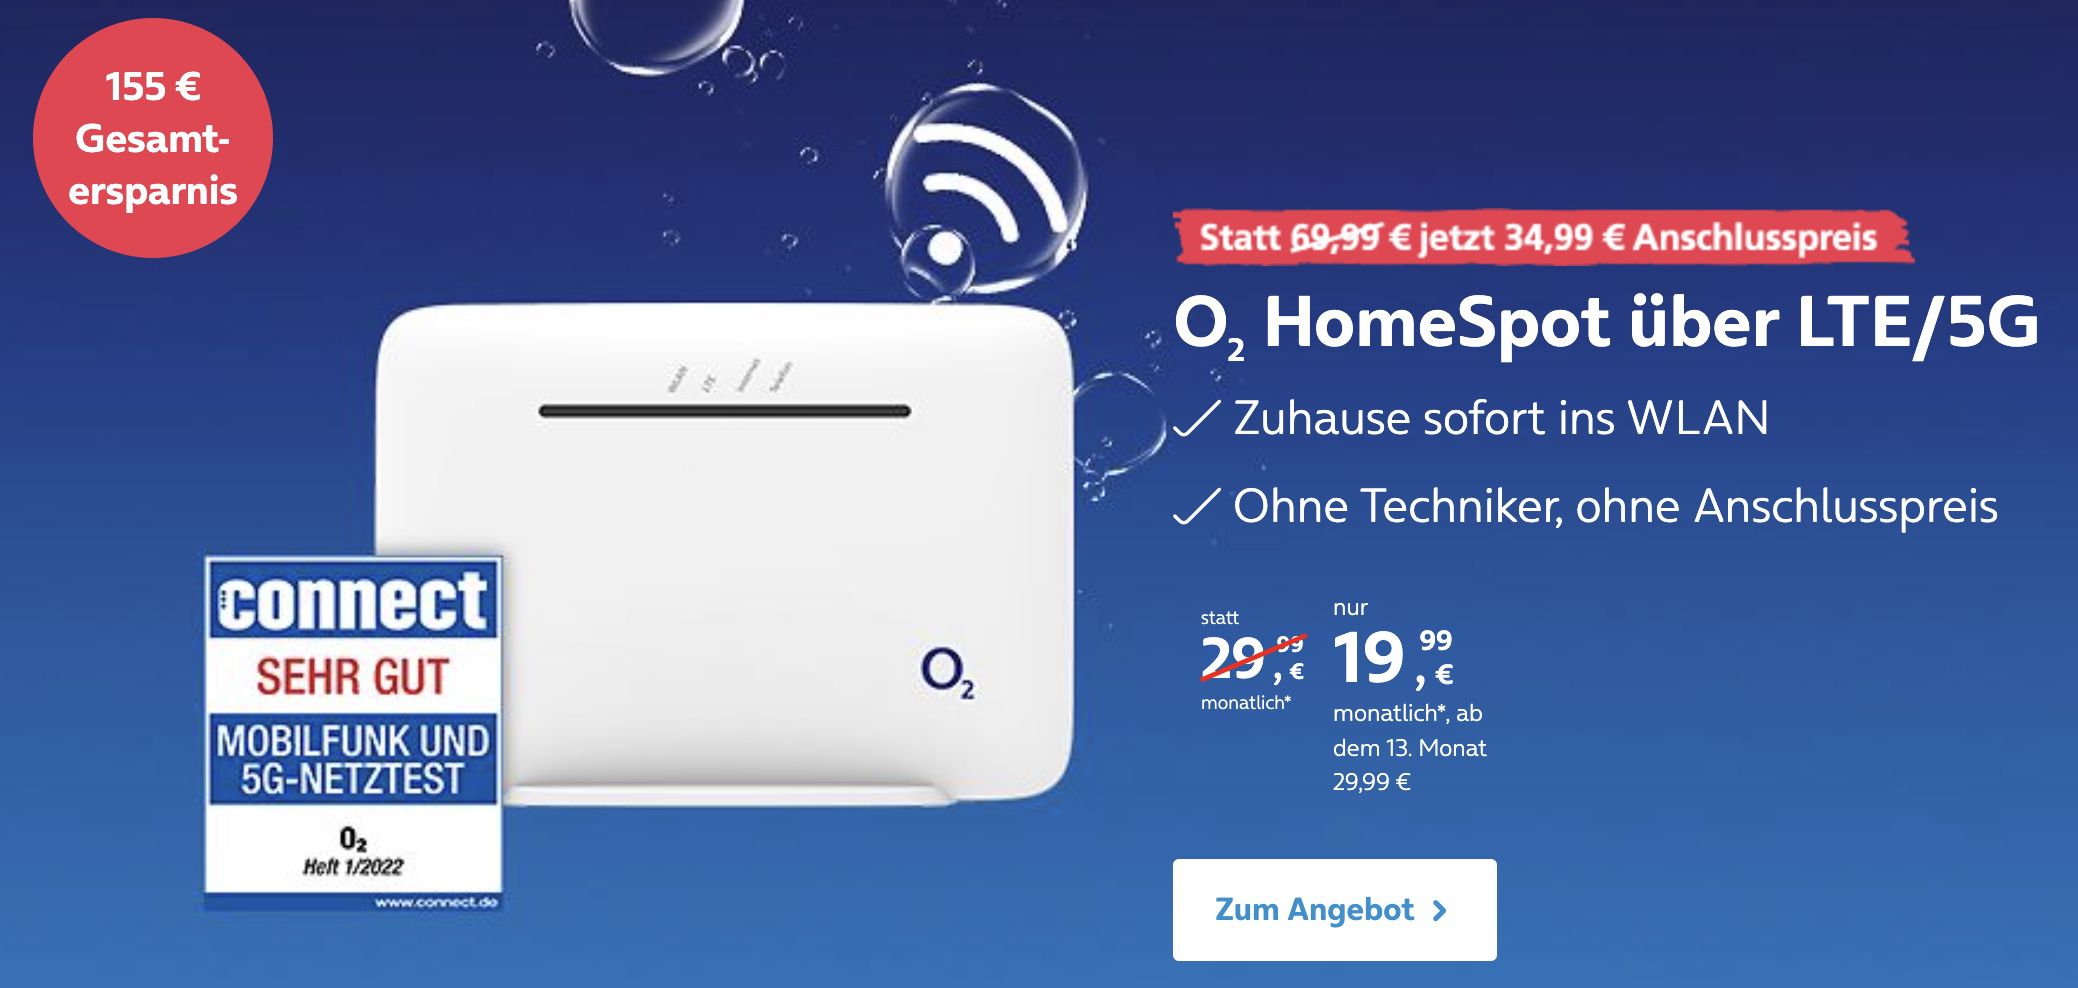 o2 myHome Homespot LTE/5G Tarife (DSL Alternative) ab 14,99€ mtl.